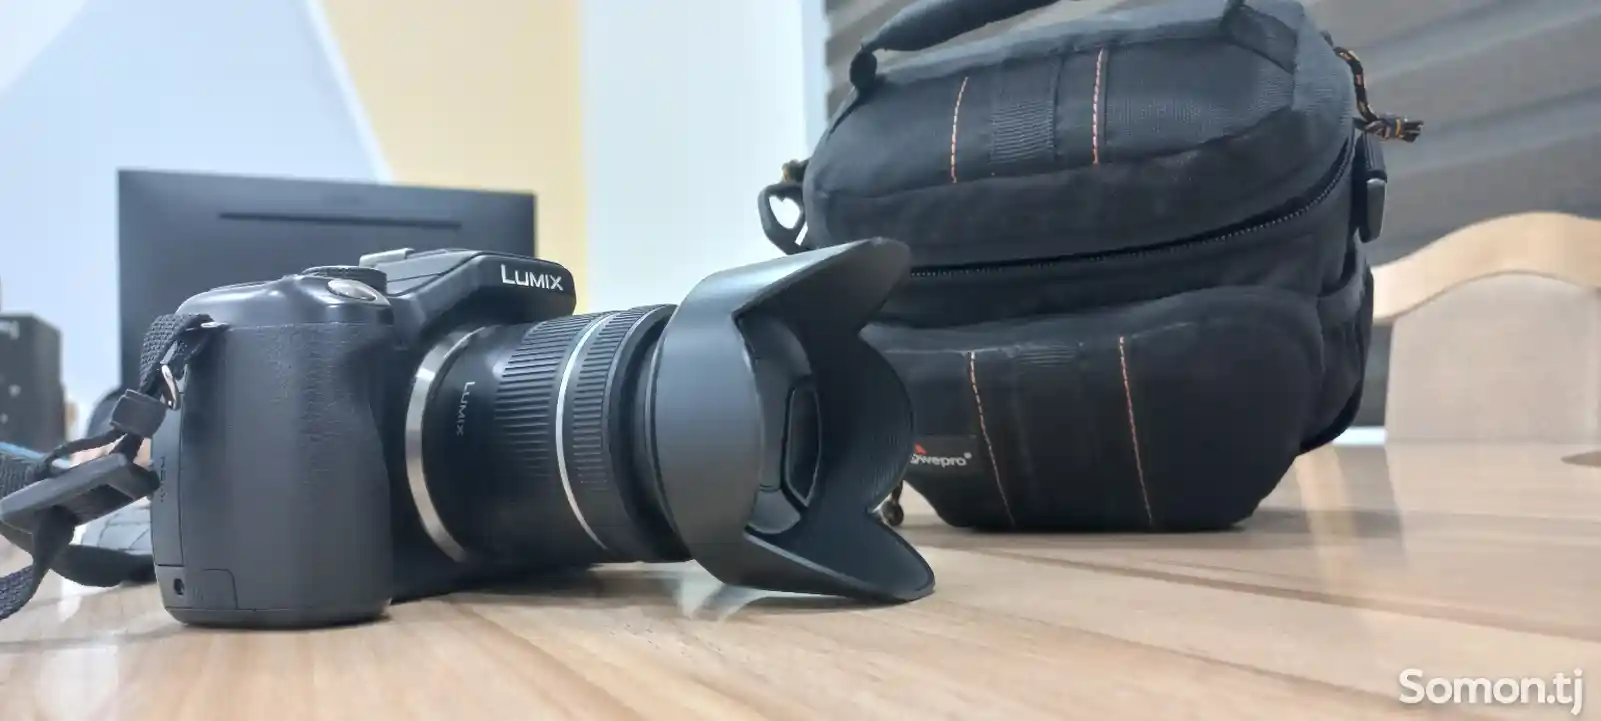 Фотоаппарат Lumix G5-2